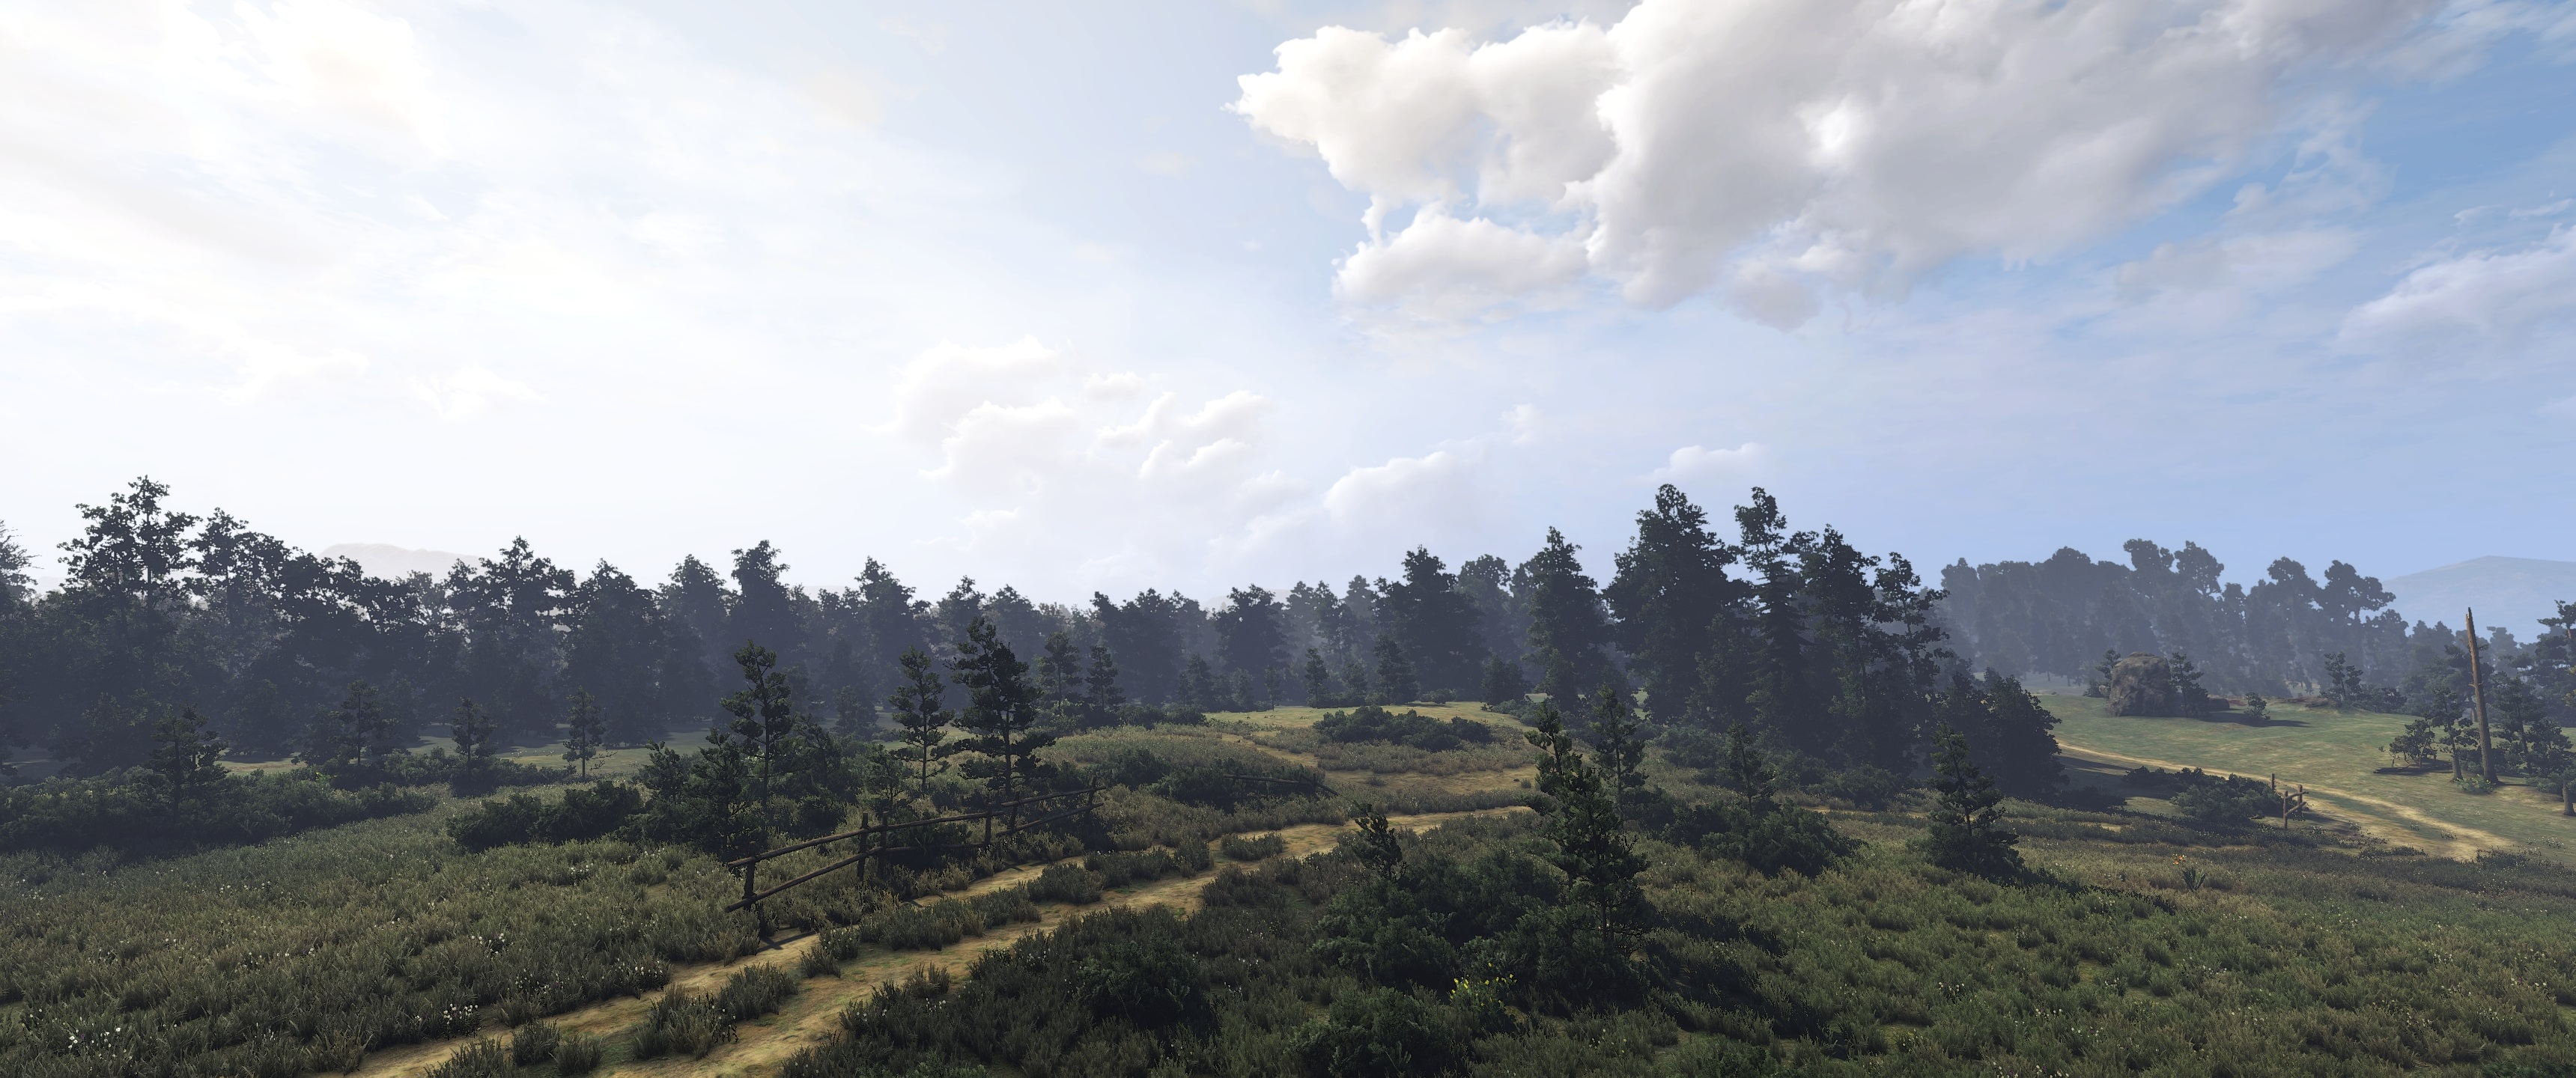 The Witcher 3 Wild Hunt Video Games Velen Sunset Screen Shot Clouds 3440x1440